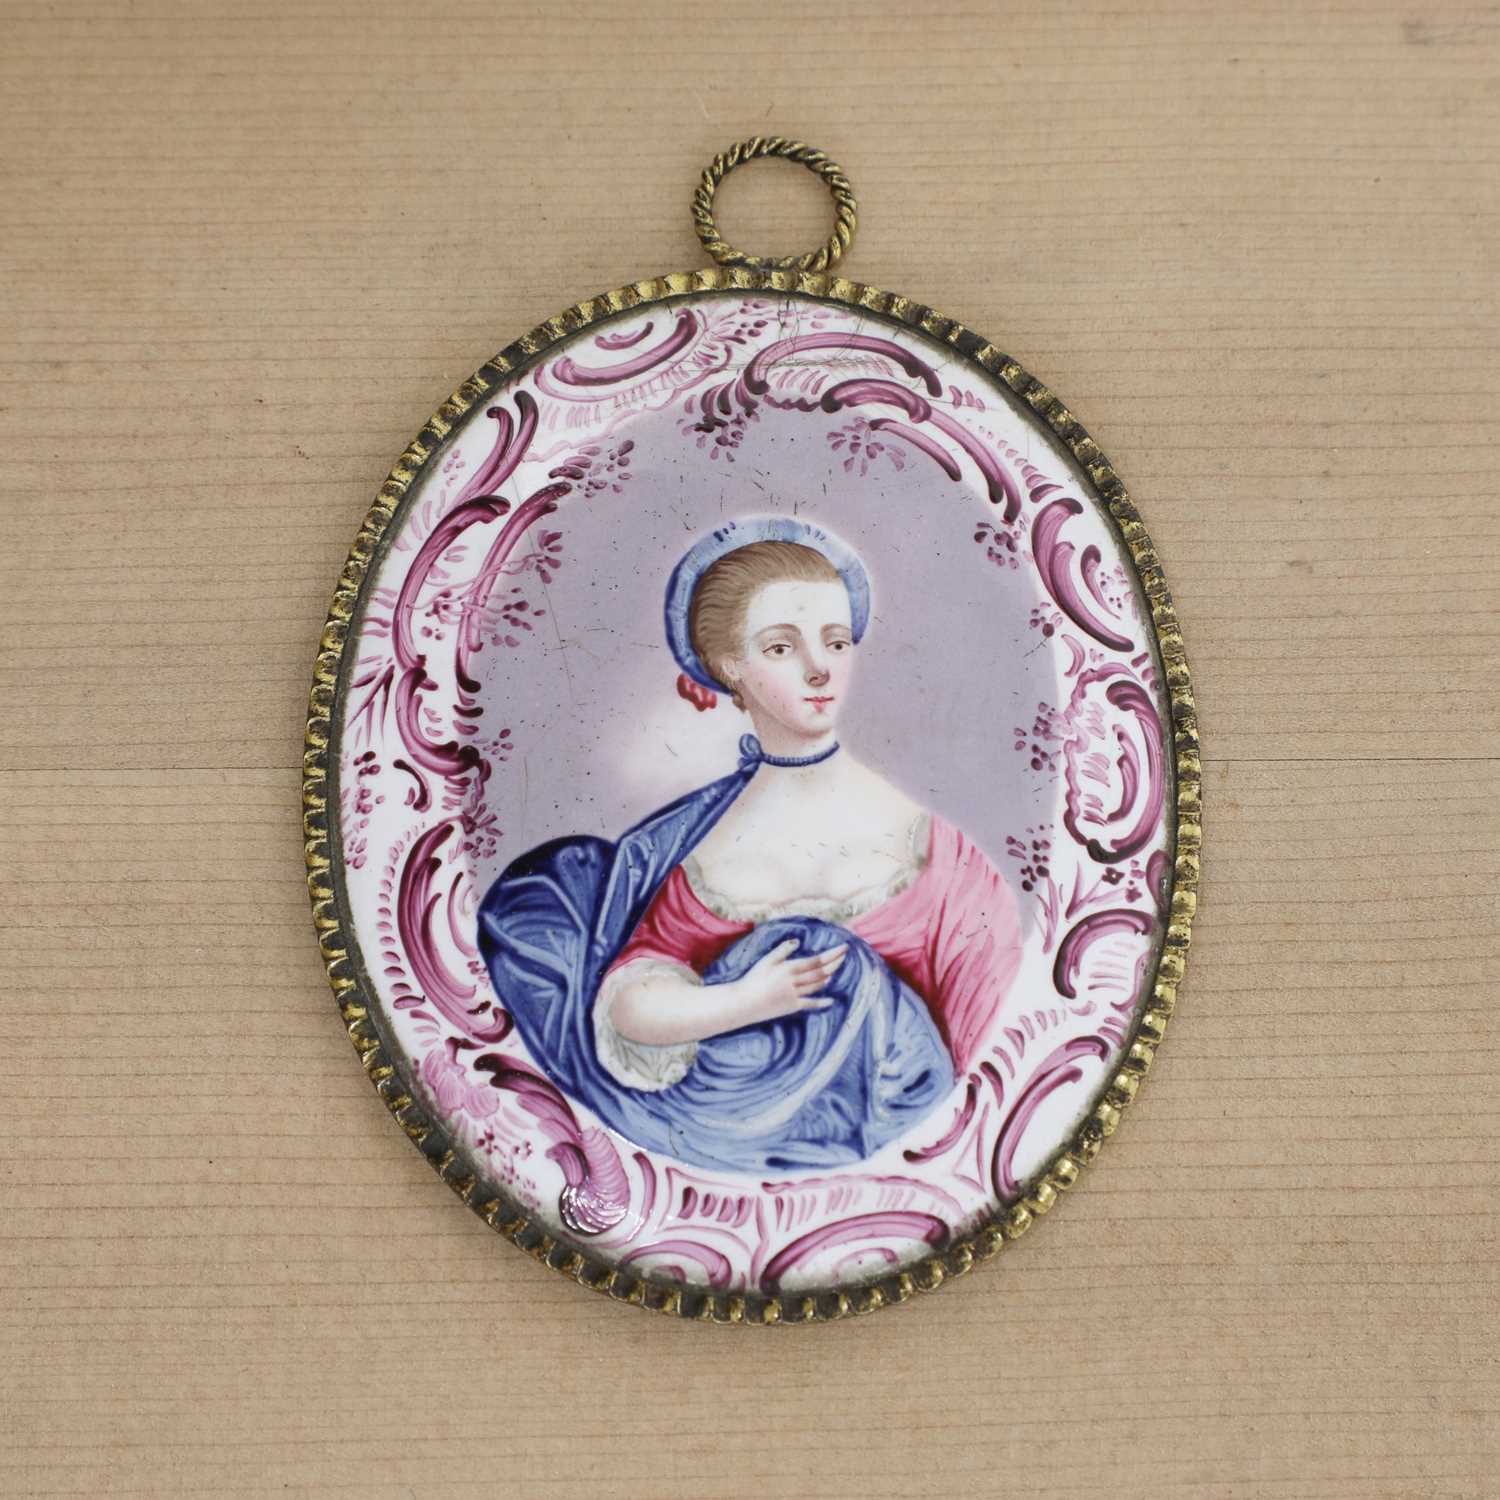 Lot 439 - An English enamel miniature portrait medallion